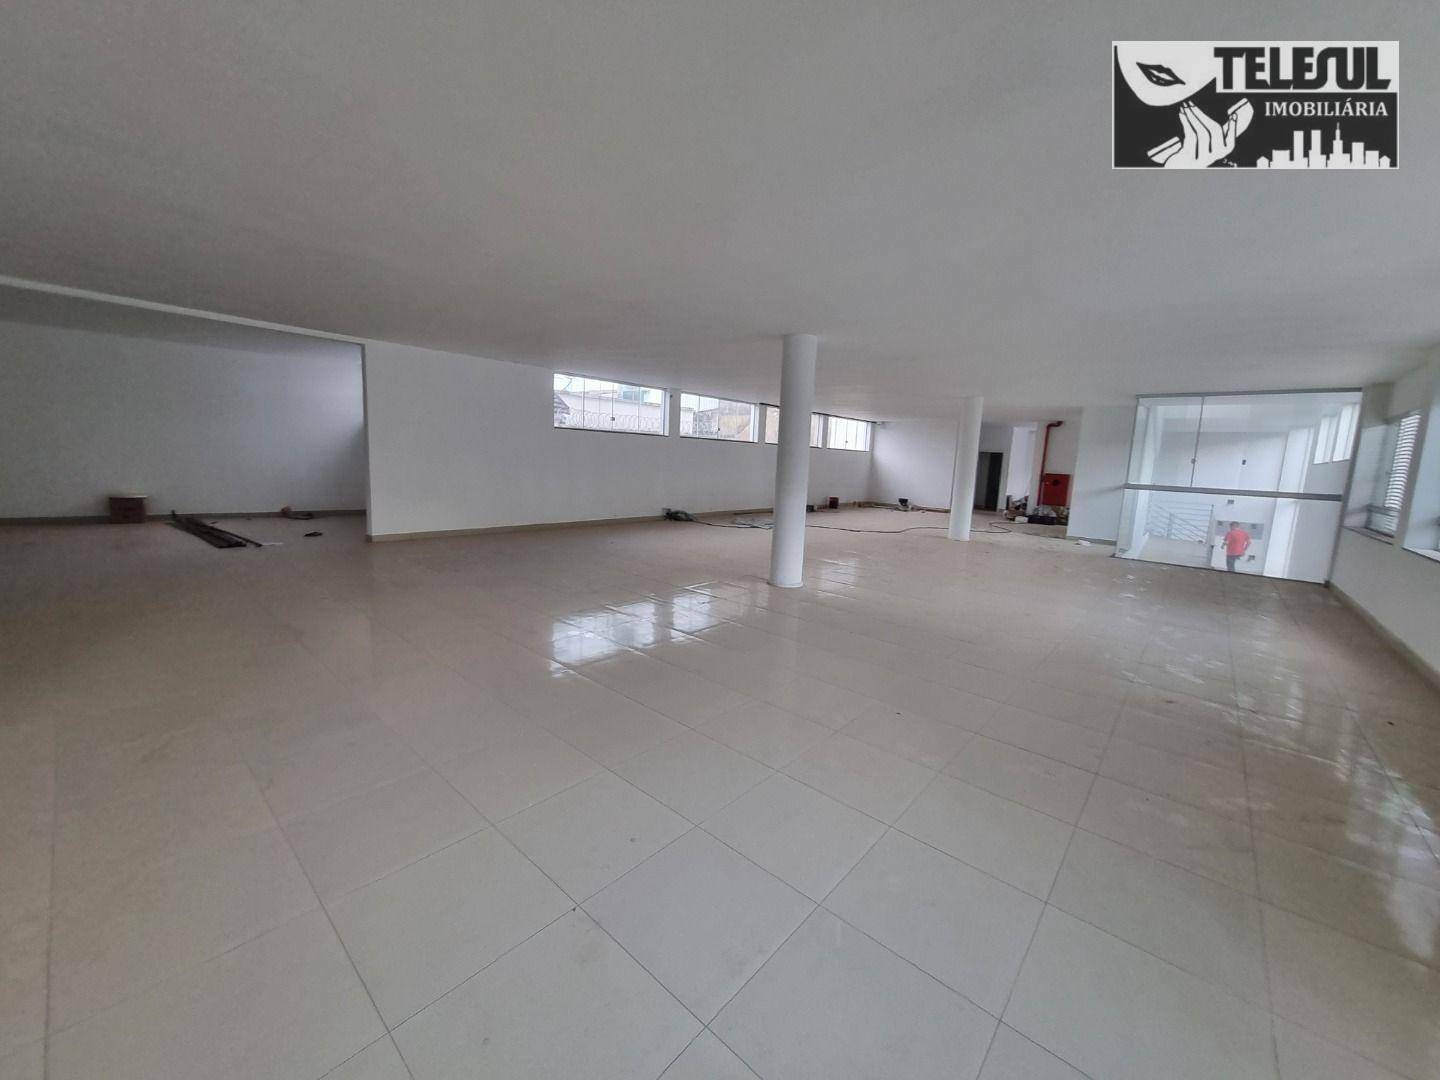 Loja-Salão, 740 m² - Foto 4